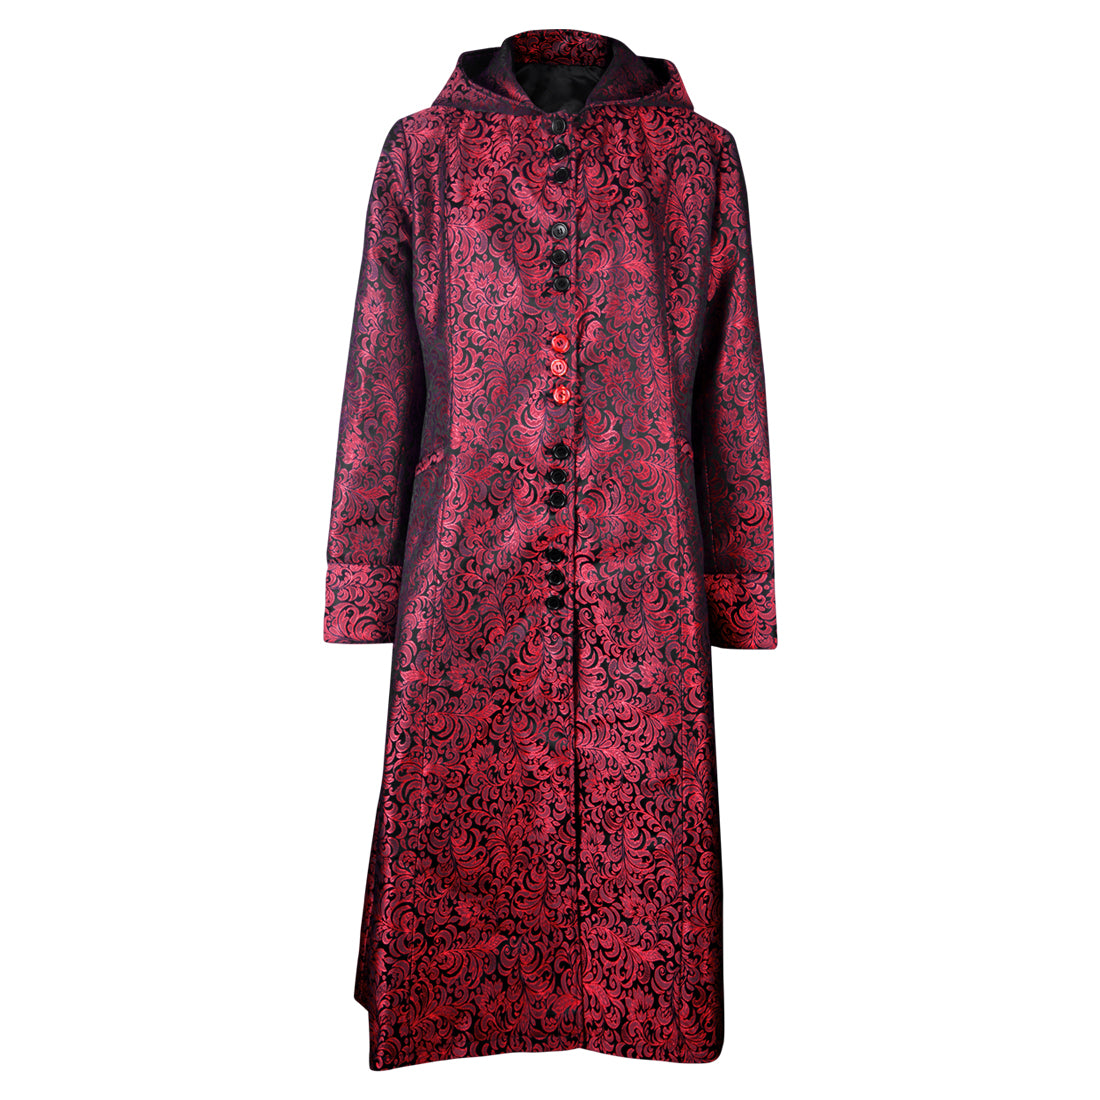 Long ladies red gothic coat